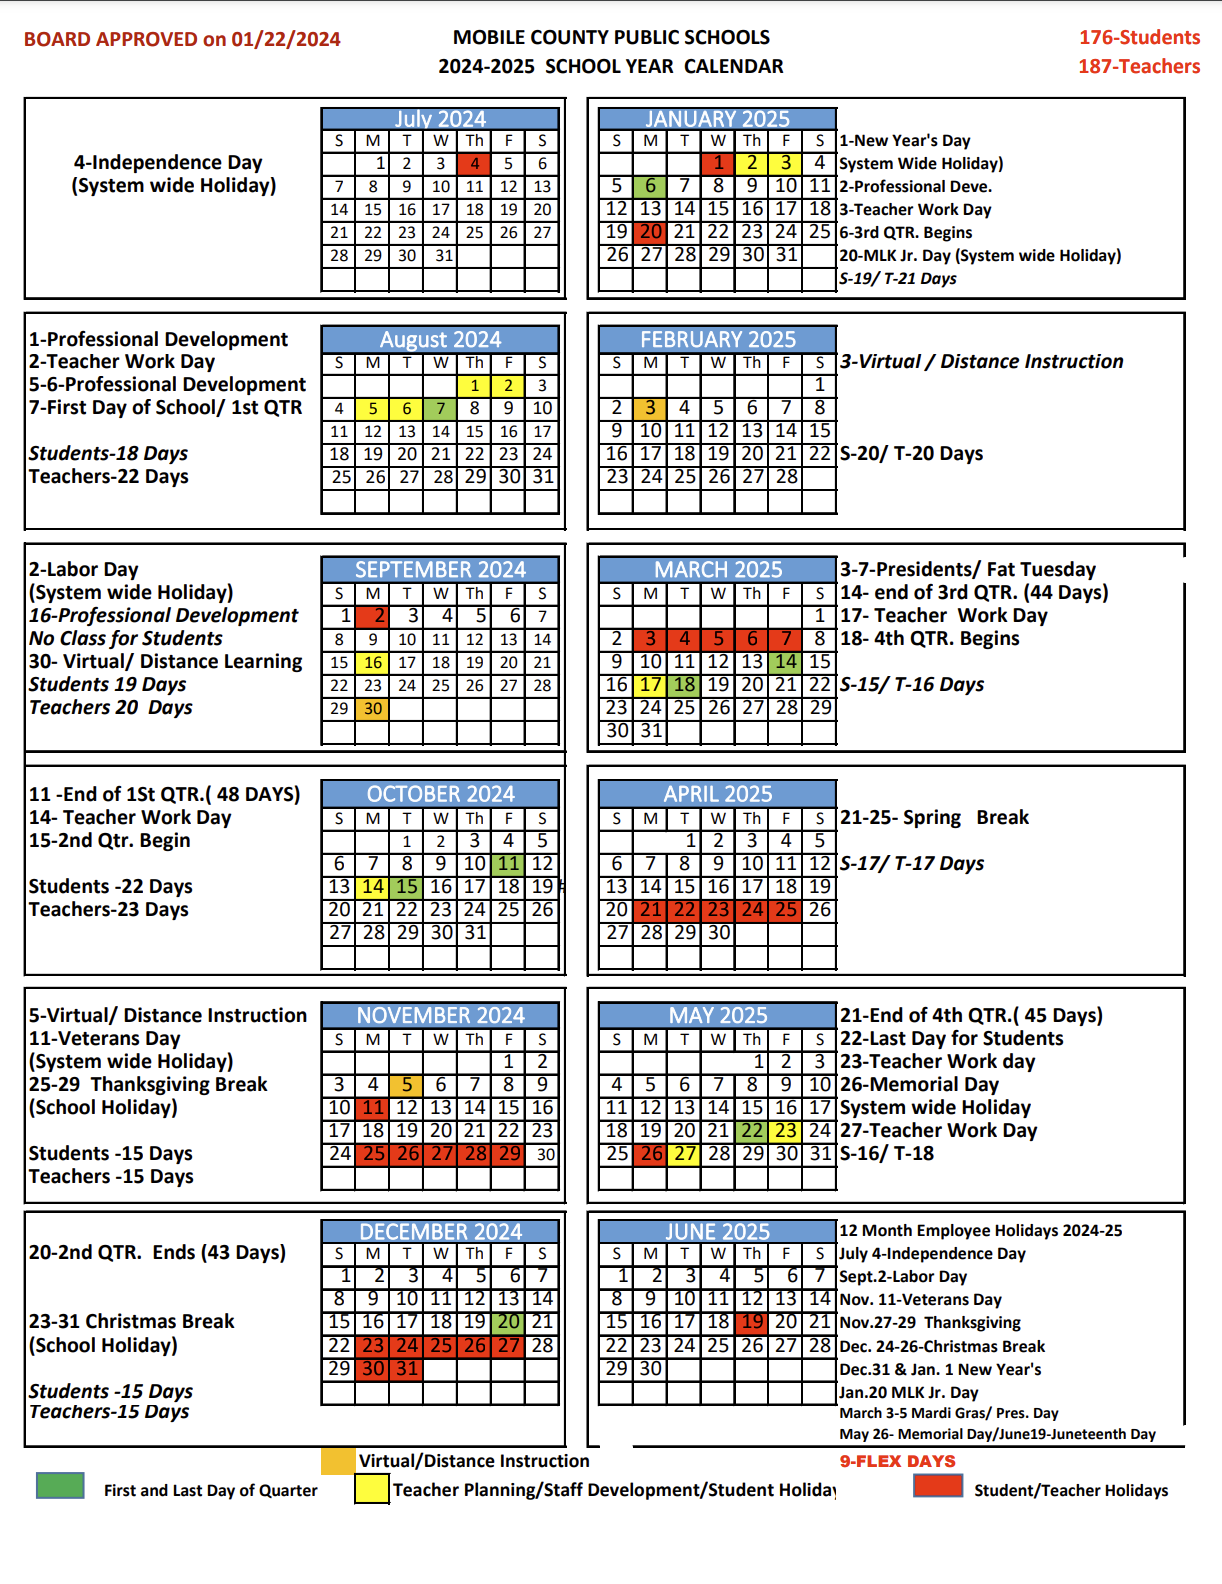 MCPSS school calendar for the 2024-2025 school year.